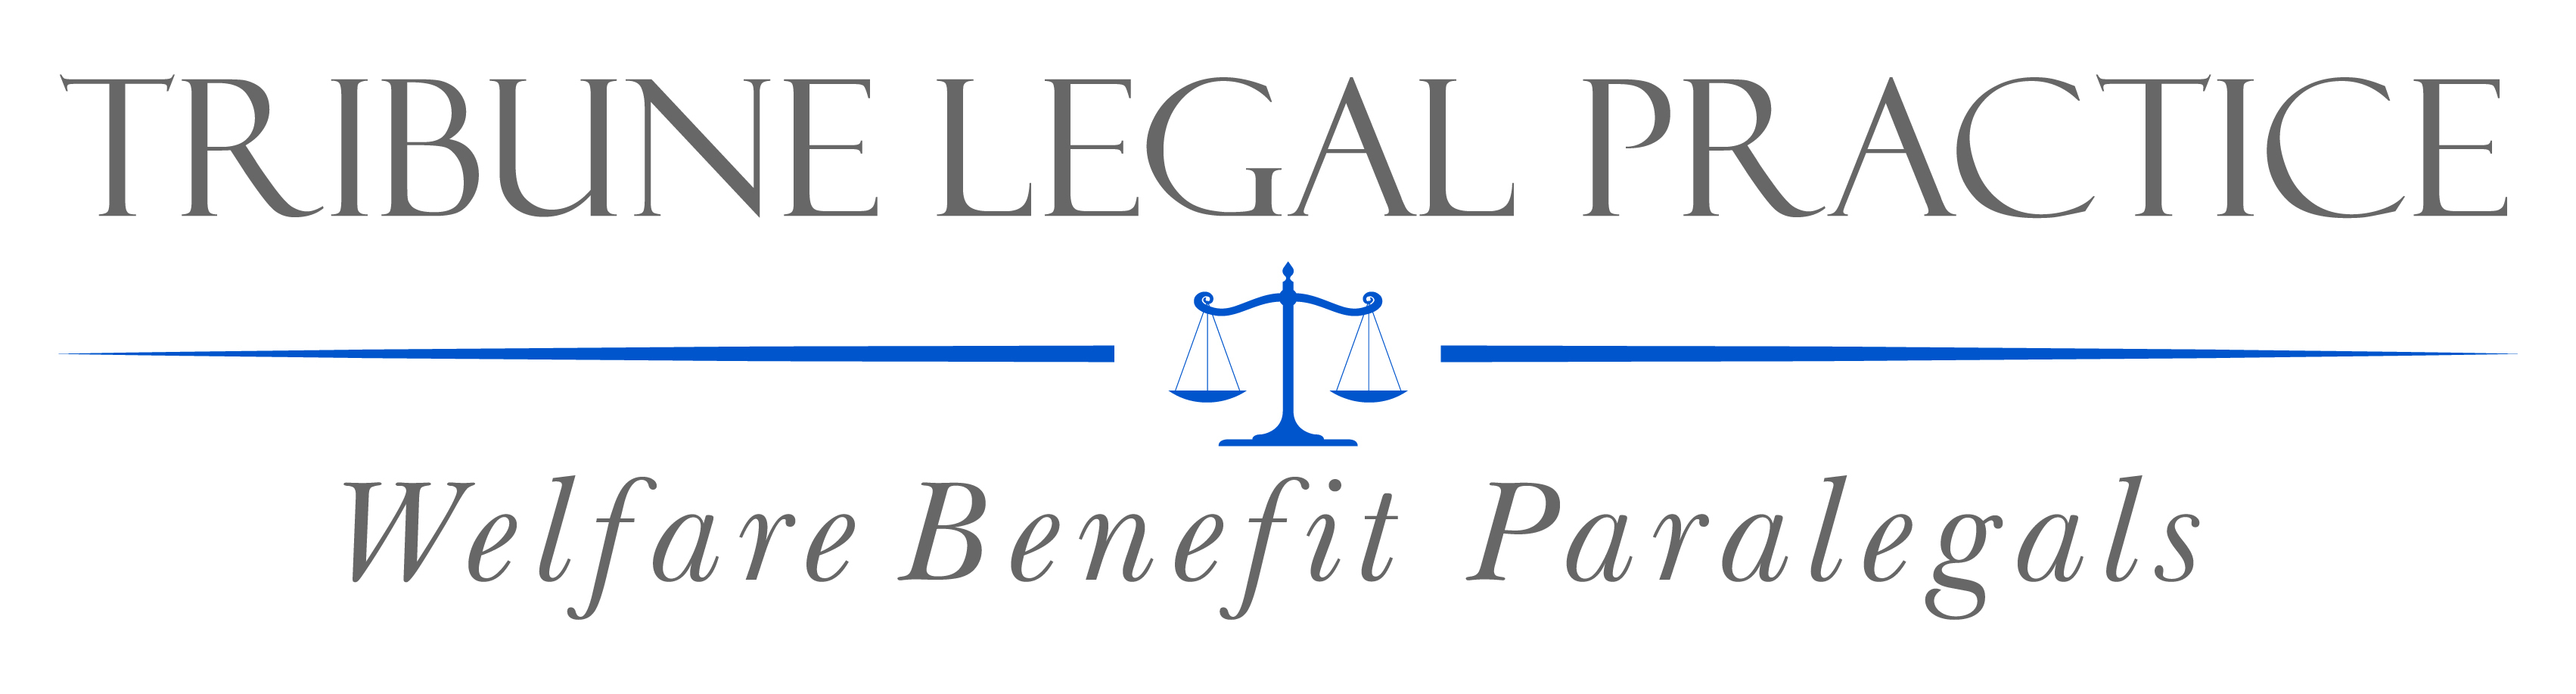 Tribune Legal Practice Welfare Benefit Paralegals